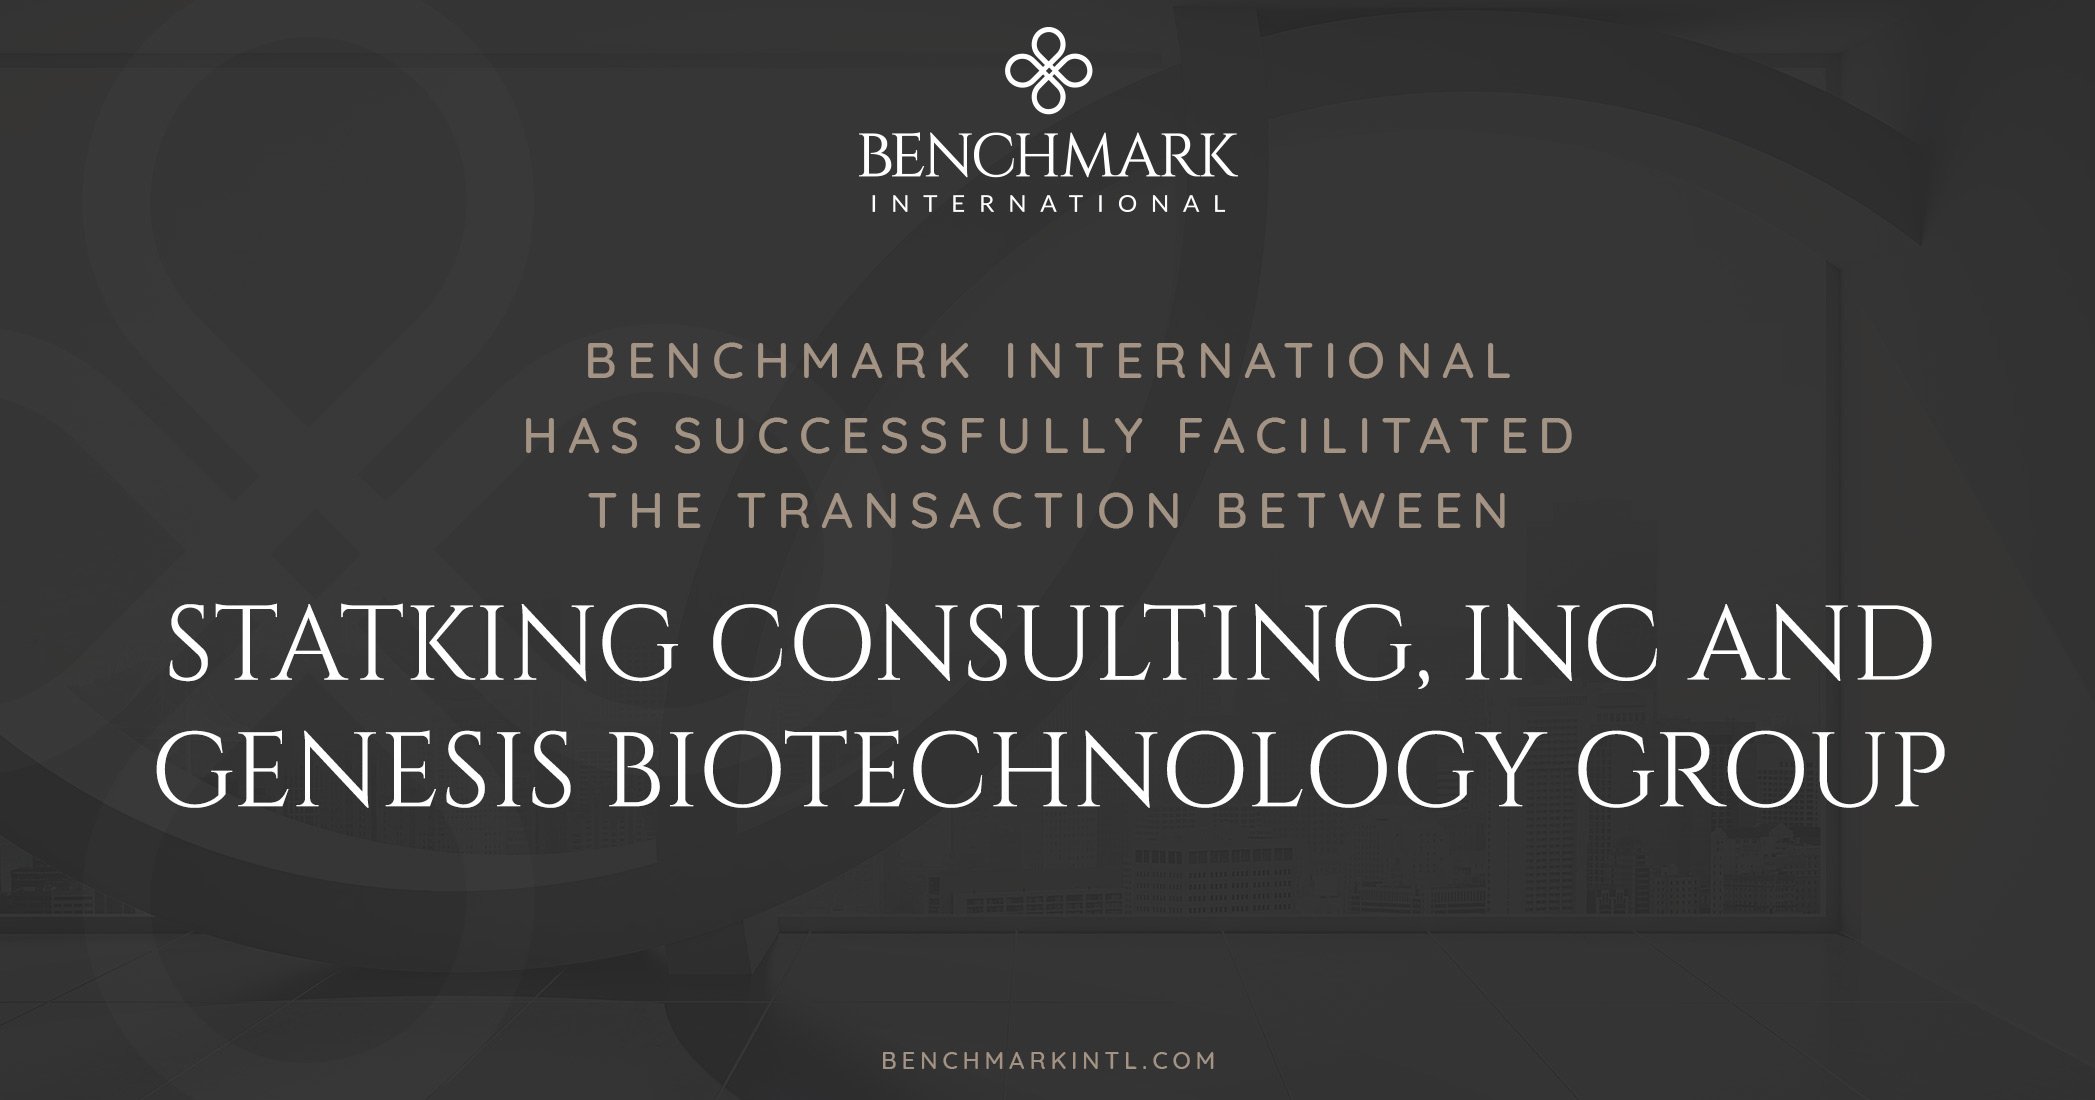 Benchmark International Successfully Facilitated the Transaction